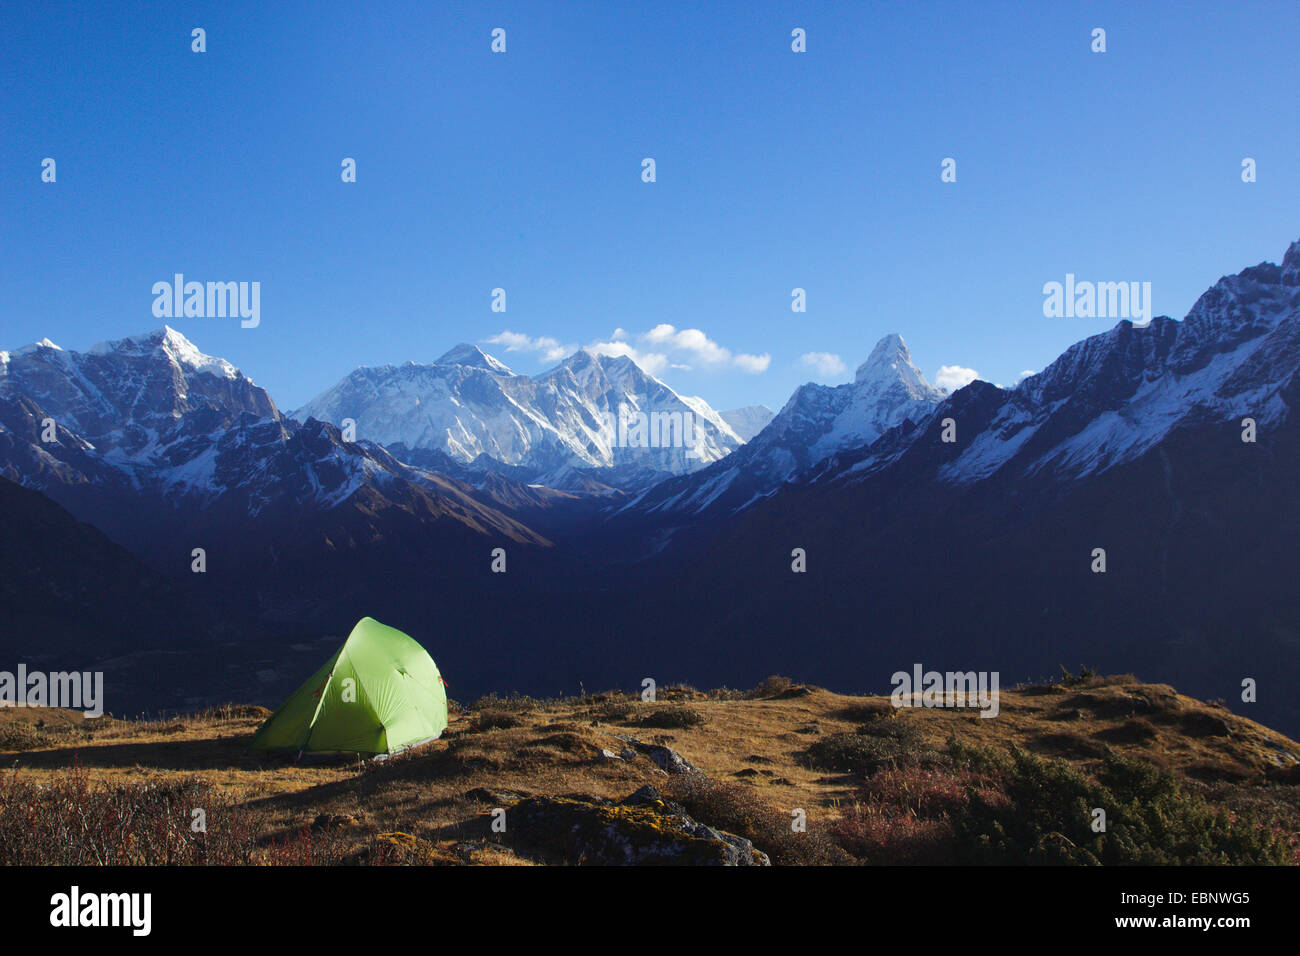 Tenda vicino Kaongde Hotel con Taboche, sul Nuptse, l'Everest, sul Lhotse e sull'Ama Dablam, Nepal, Khumbu Himal Foto Stock